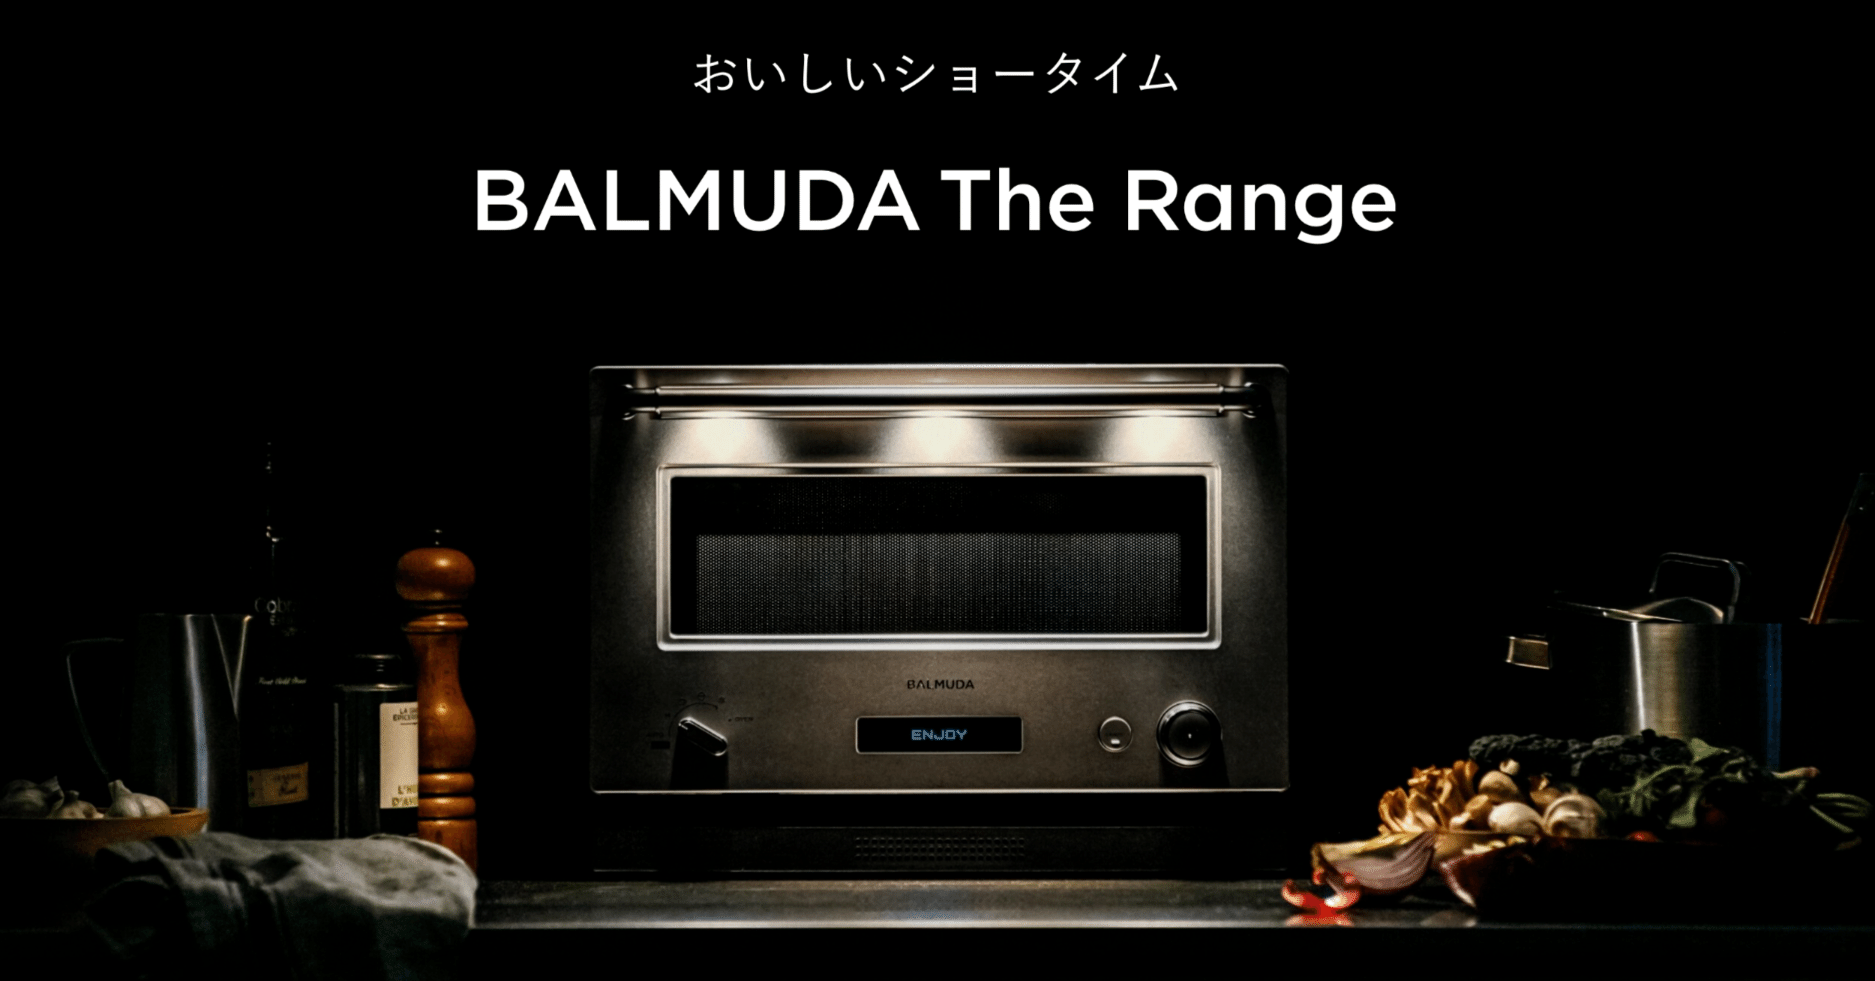 BALMUDA The Range 
バルミューダオーブンレンジ 
ブラック